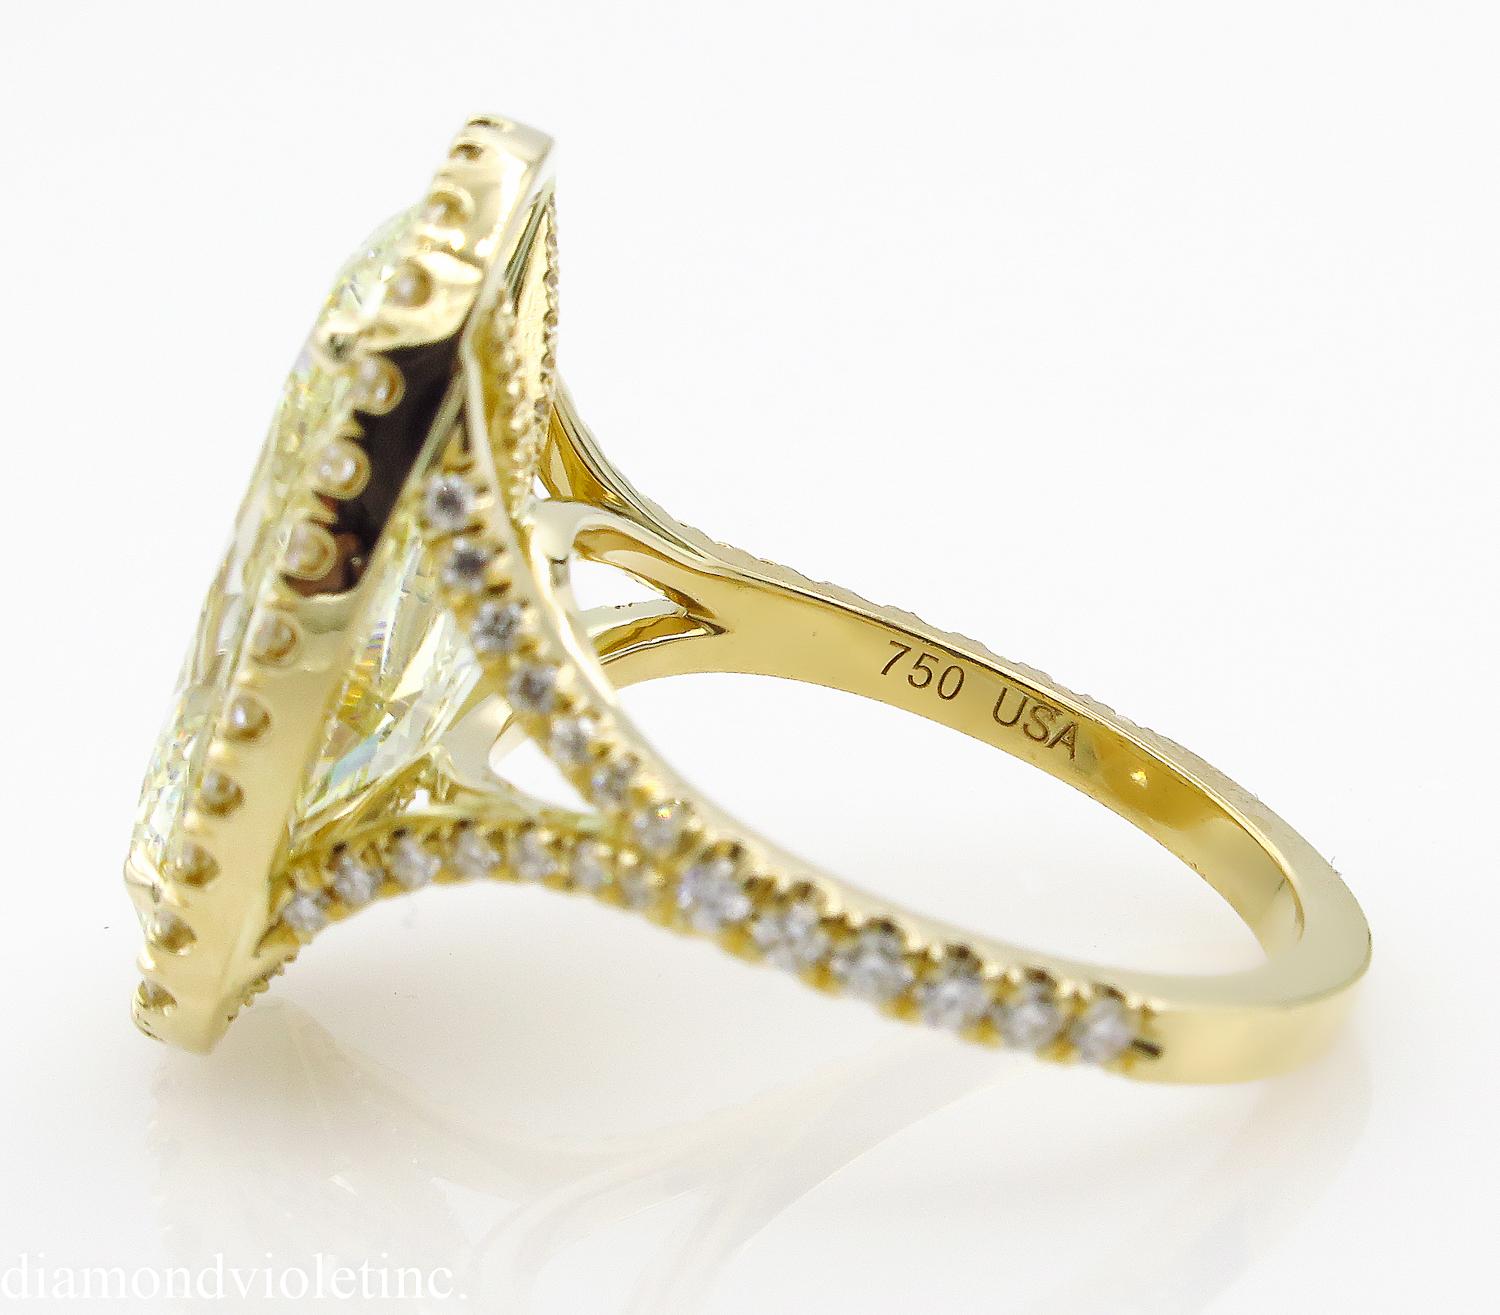 7.09 Carat Oval Diamond Halo Engagement Wedding Yellow Gold Ring EGL, USA 2